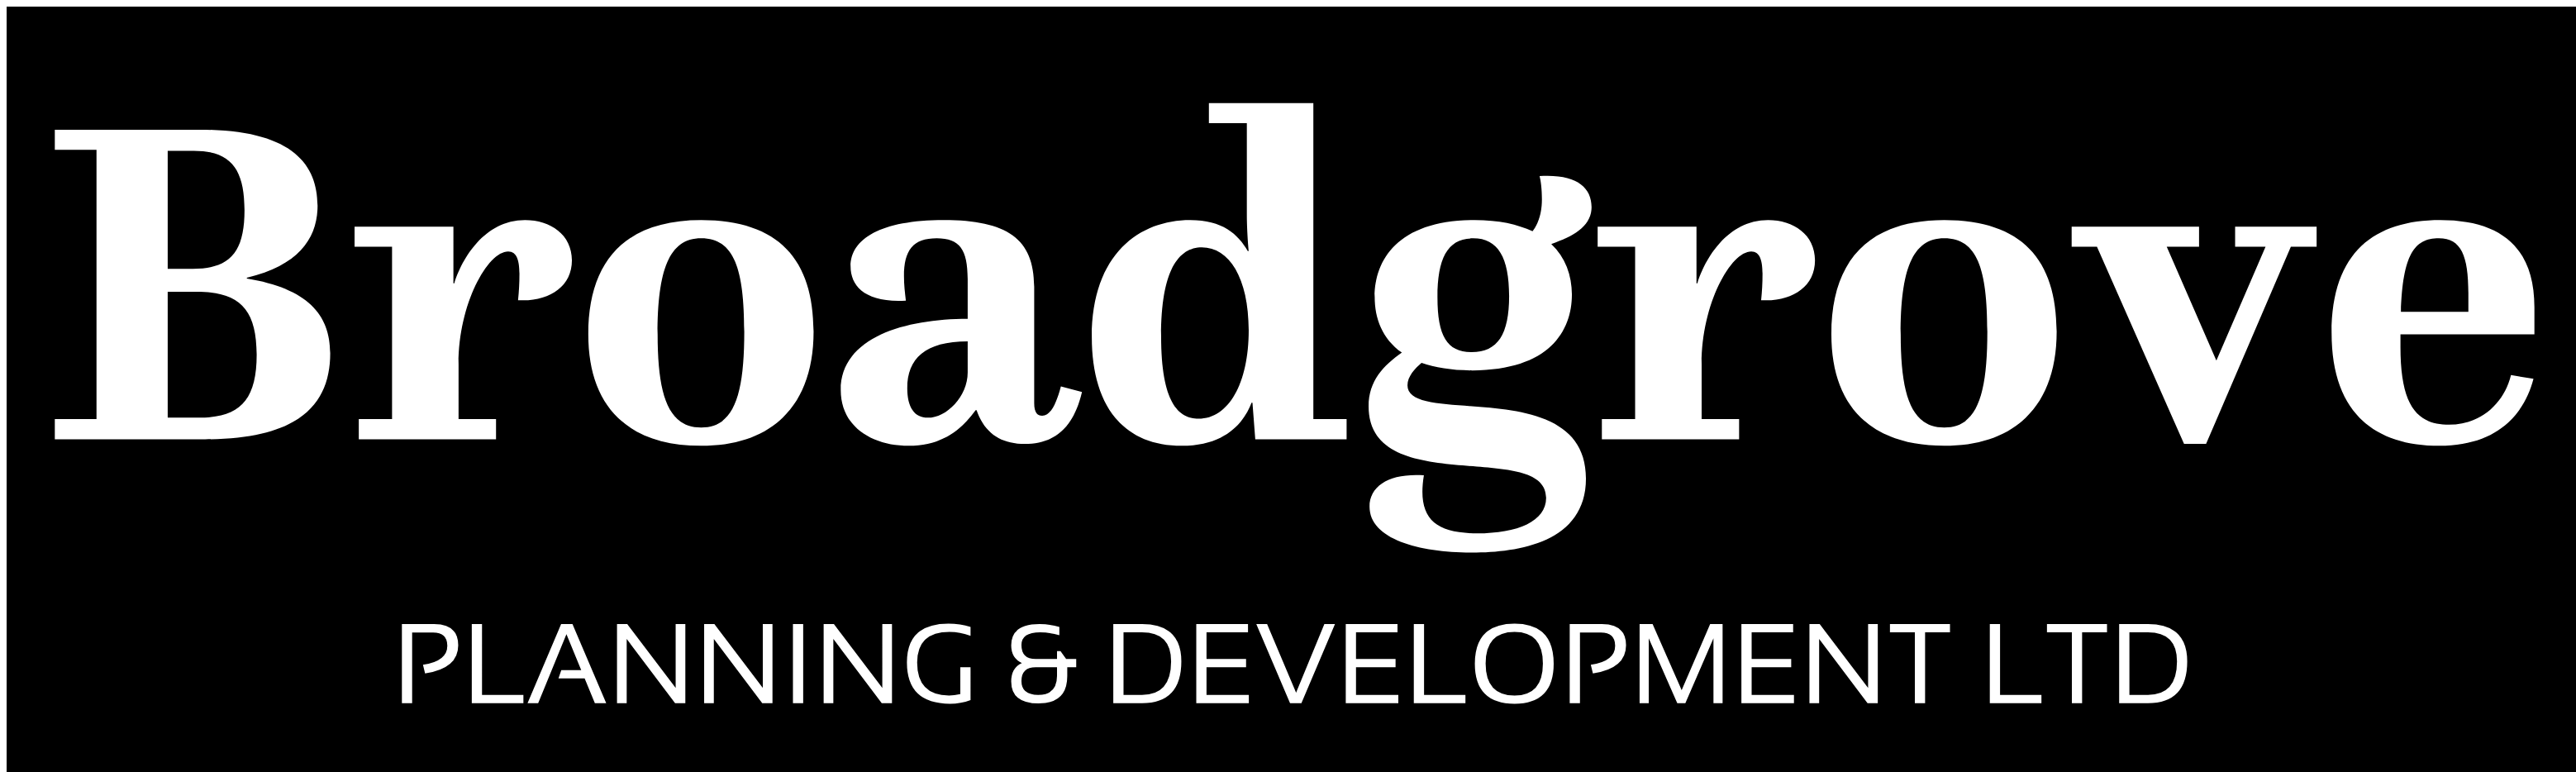 Broadgrove Planning & Development Ltd's logo